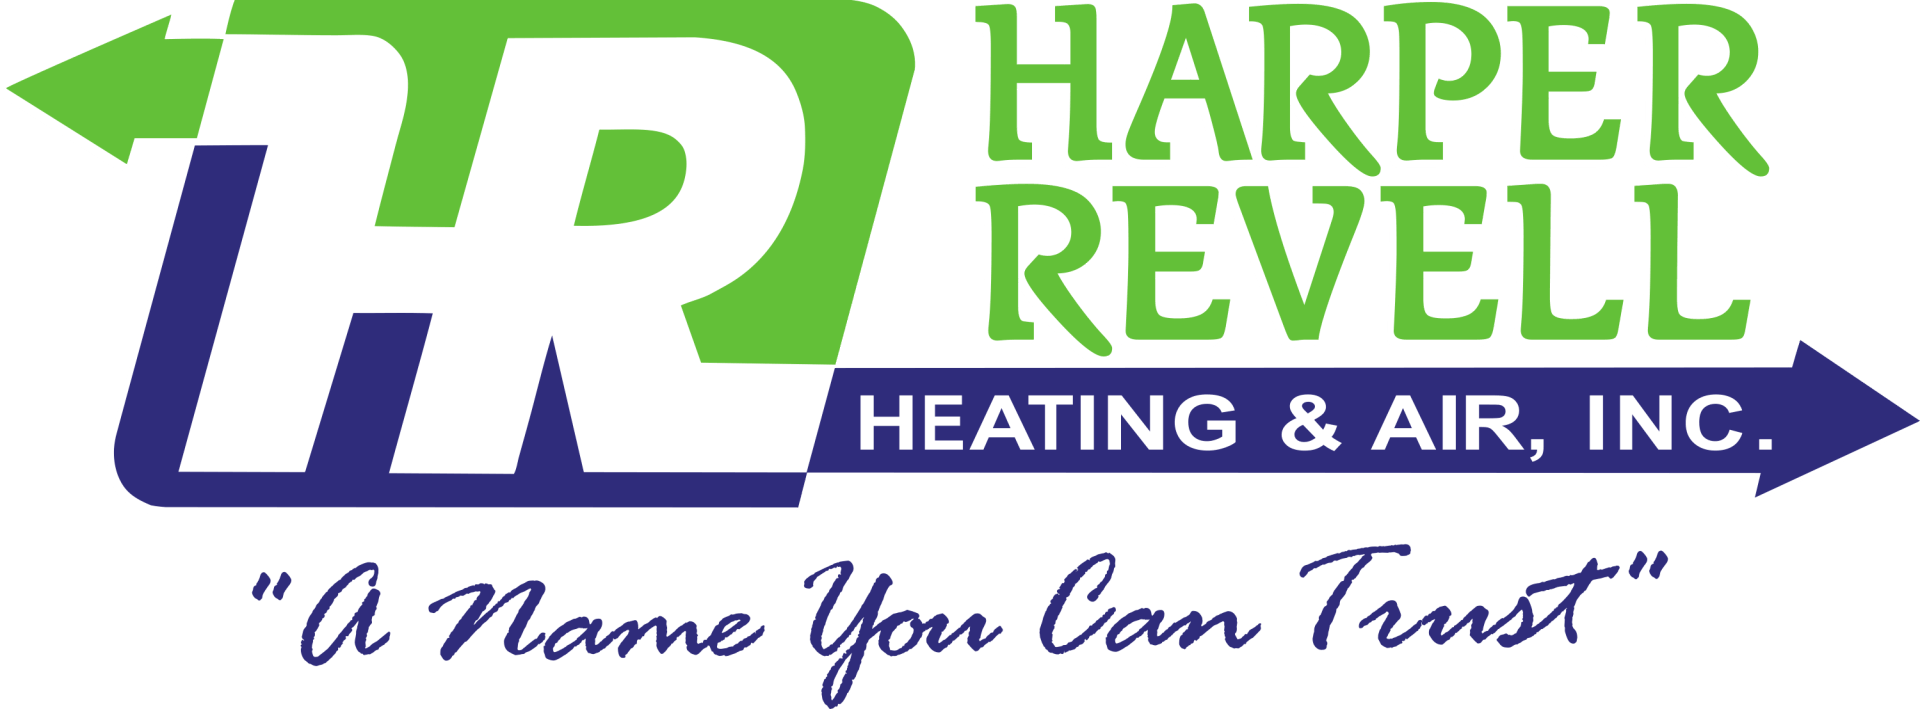 Harper Revell Heating & Air Inc. Logo